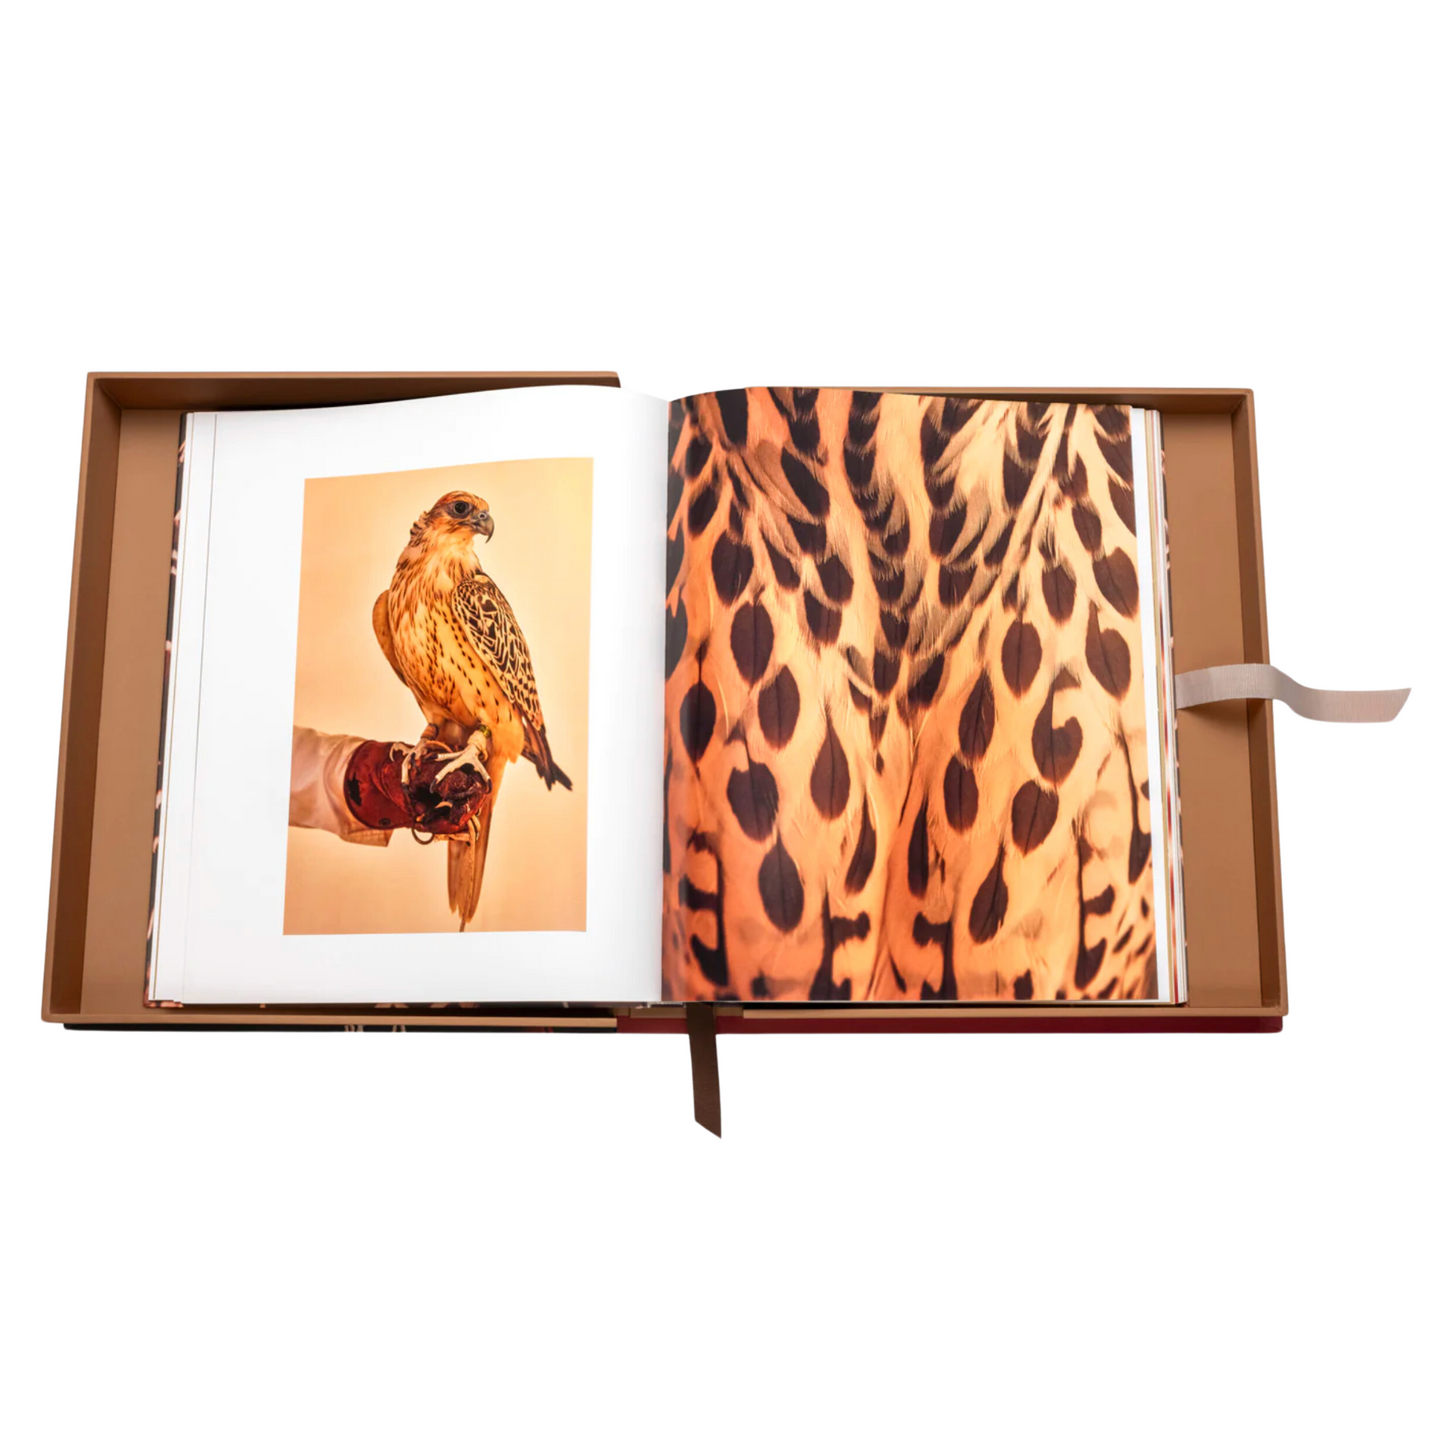 Falcons of Saudia Arabia - Ultimate Collection